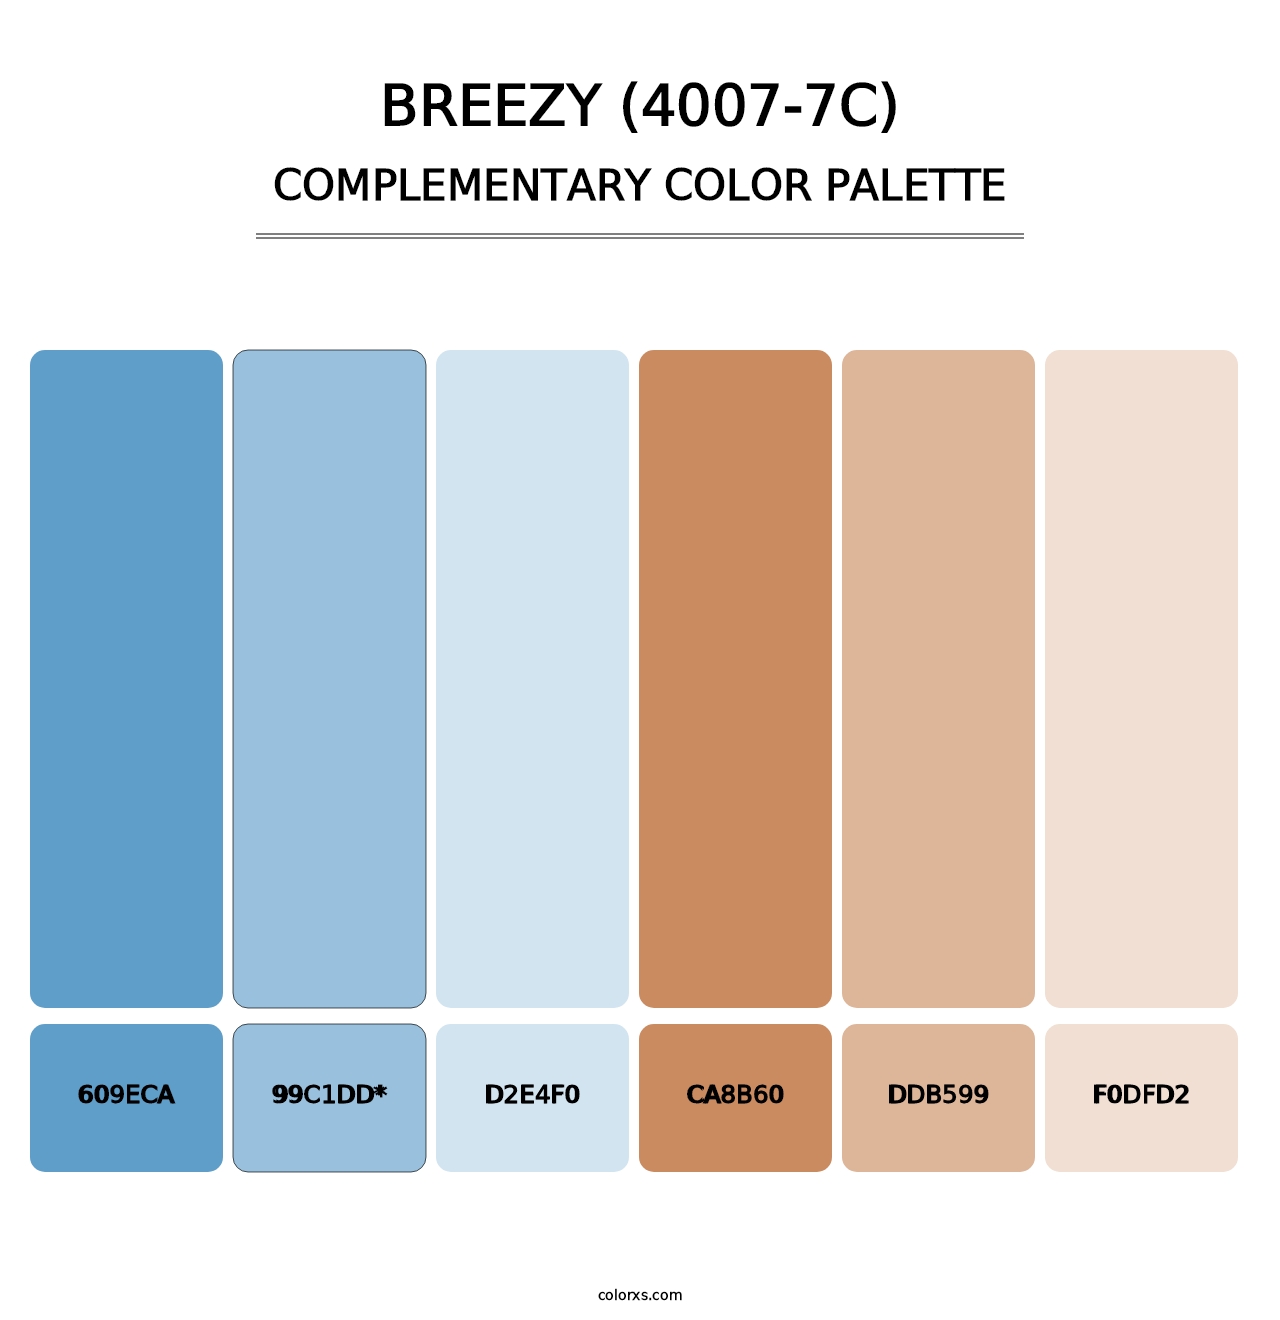 Breezy (4007-7C) - Complementary Color Palette